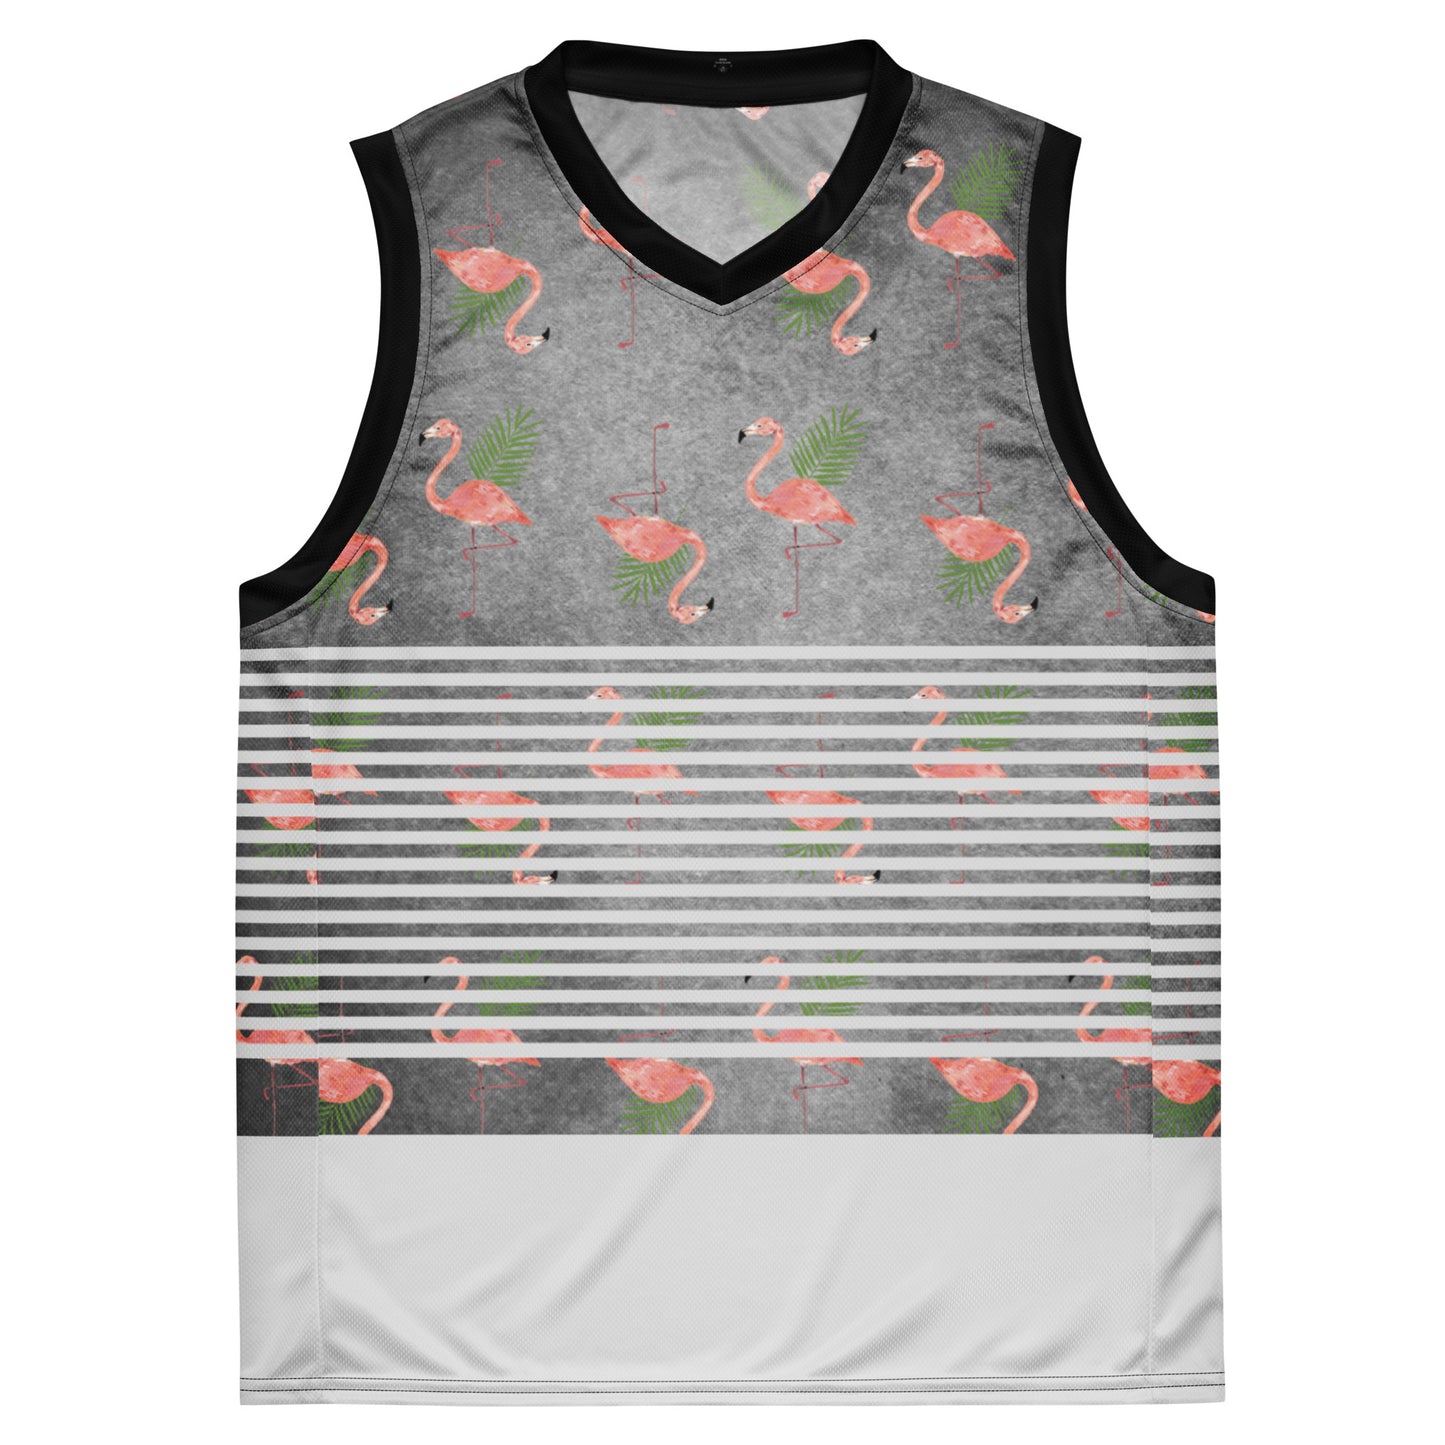 Flamingo KiSS Recycled unisex basketball jersey - Brooklyn Nine Nine inspired 99 Jake Peralta Coral Palms